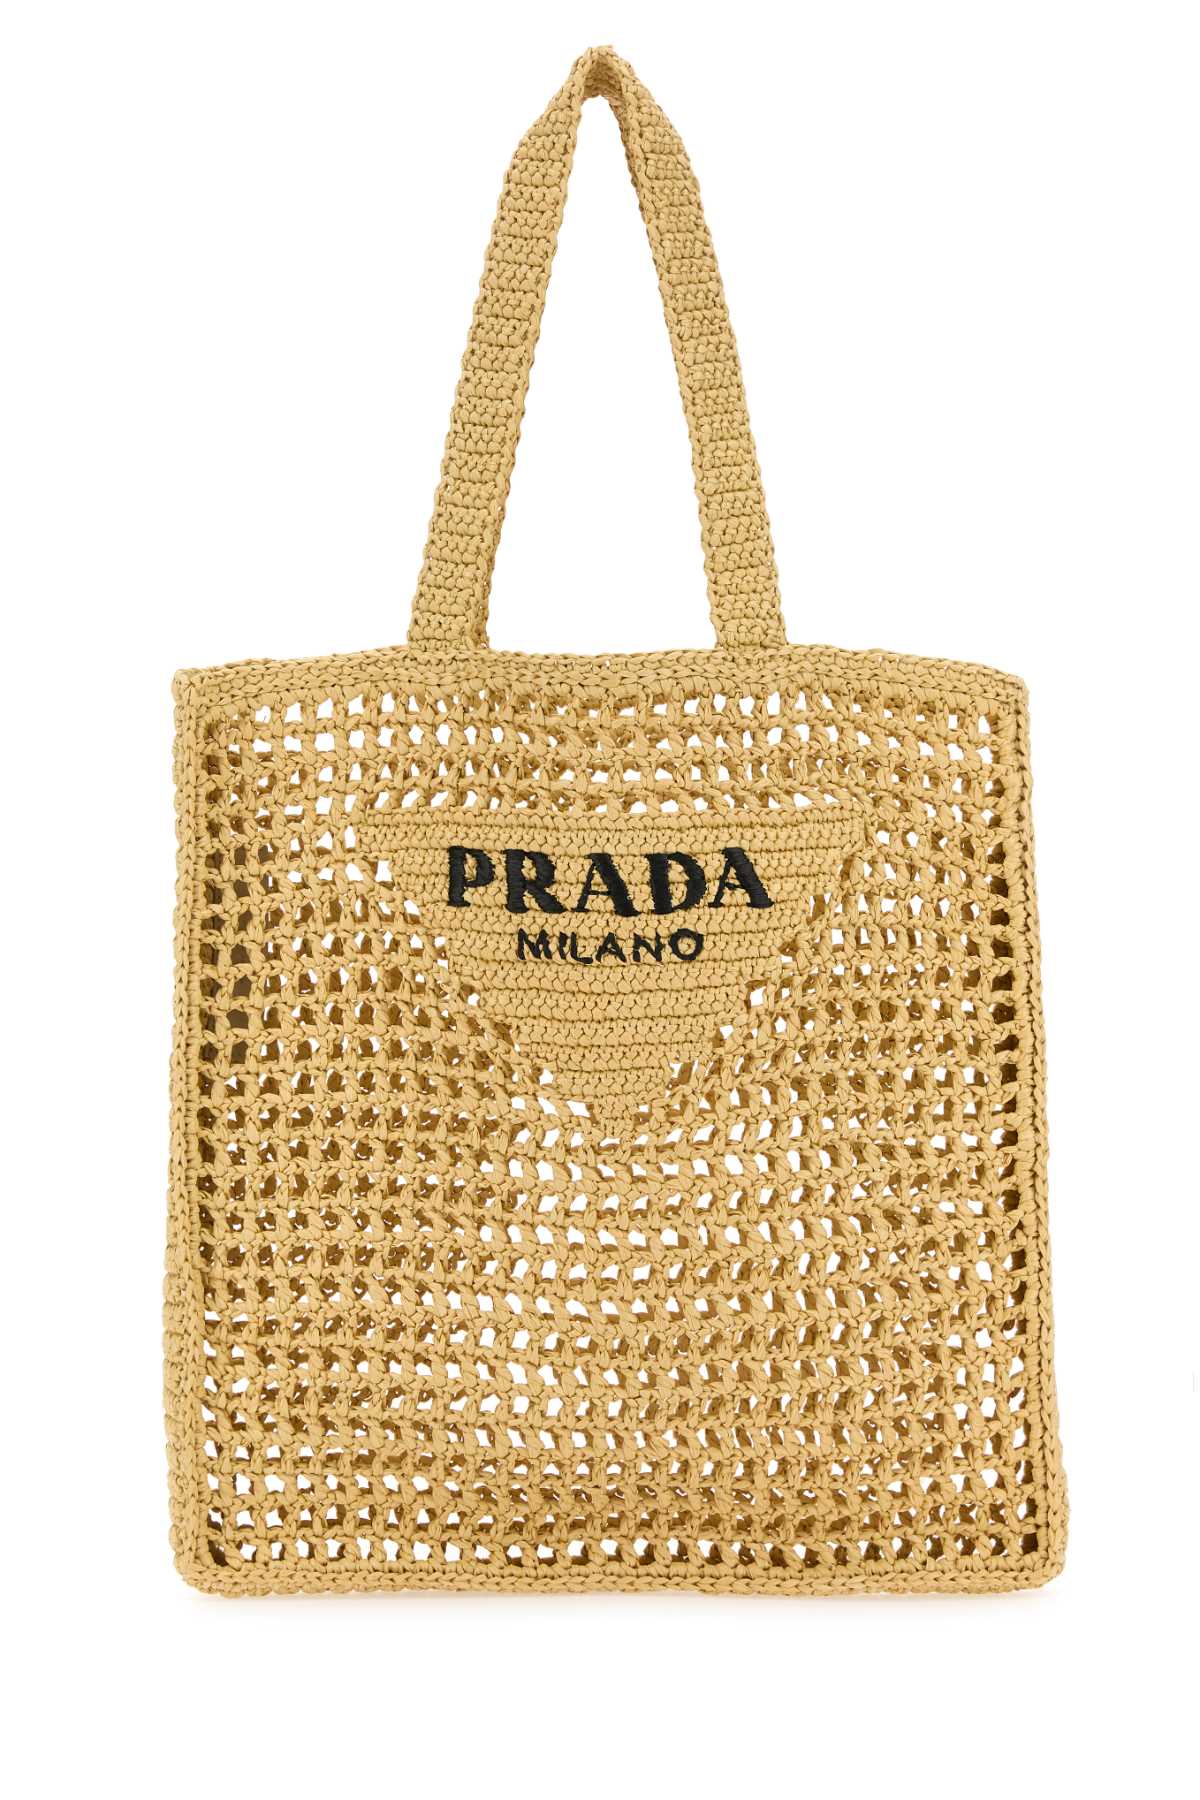 Prada Raffia Shopping Bag